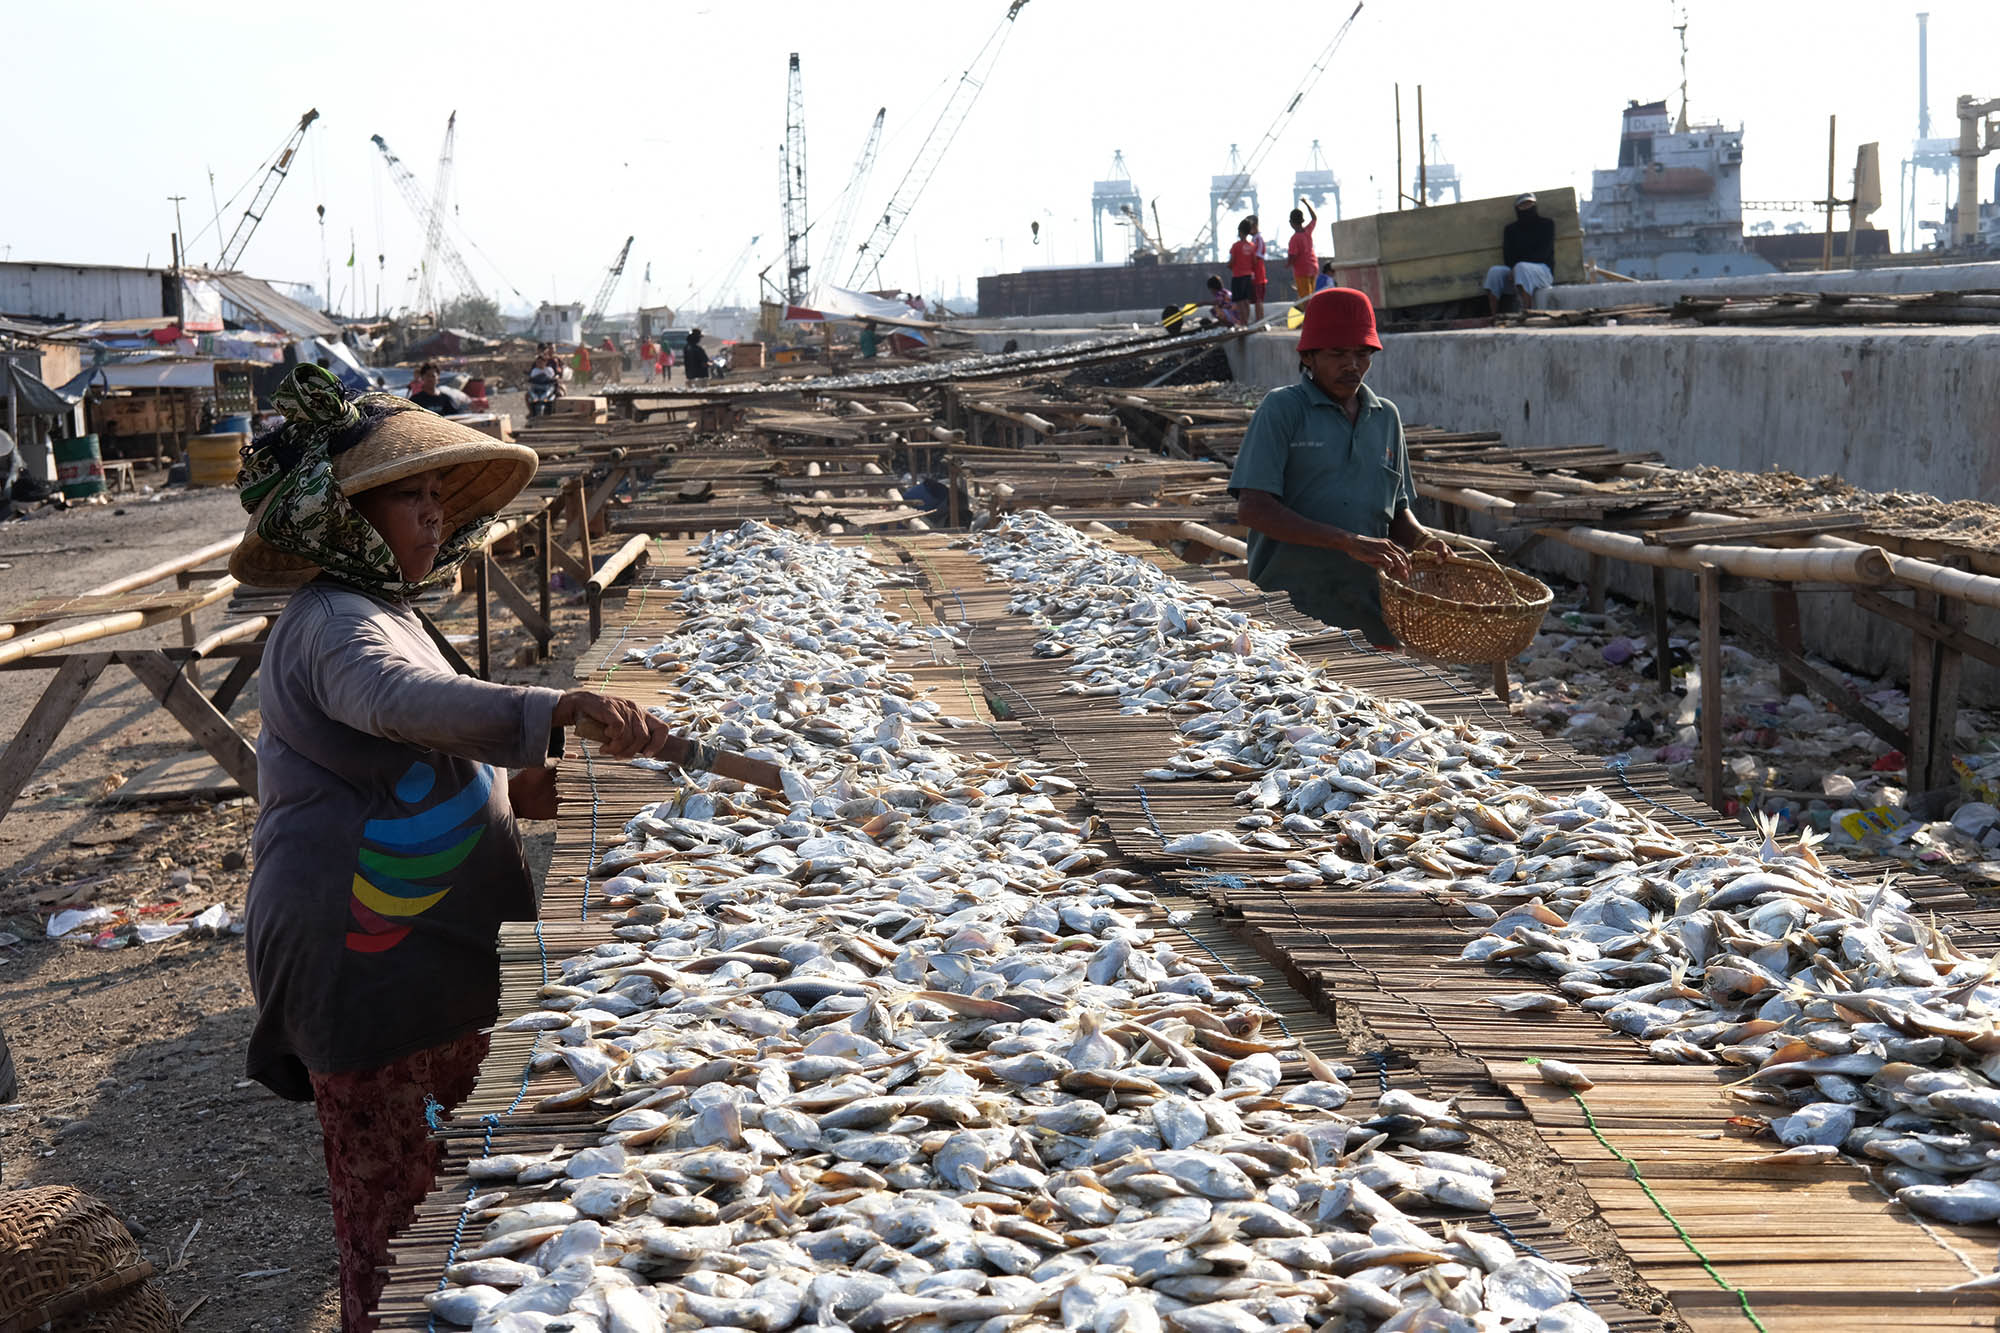 <p>Nelayan menjemur ikan hasil laut di perkampungan nelayan kawasan Cilincing, Jakarta Utara, Minggu, 26 Juli 2020. Warga dan nelayan mengaku dampak pembatasan sosial berskala besar (PSBB) akibat pandemi COVID-19 sangat berpengaruh terhadap perekonomian warga pesisir Jakarta Utara. Harga jual hasil laut nelayan merosot tajam, seperti harga jual ikan berkurang hingga setengah harga normal. Foto: Ismail Pohan/TrenAsia</p>
